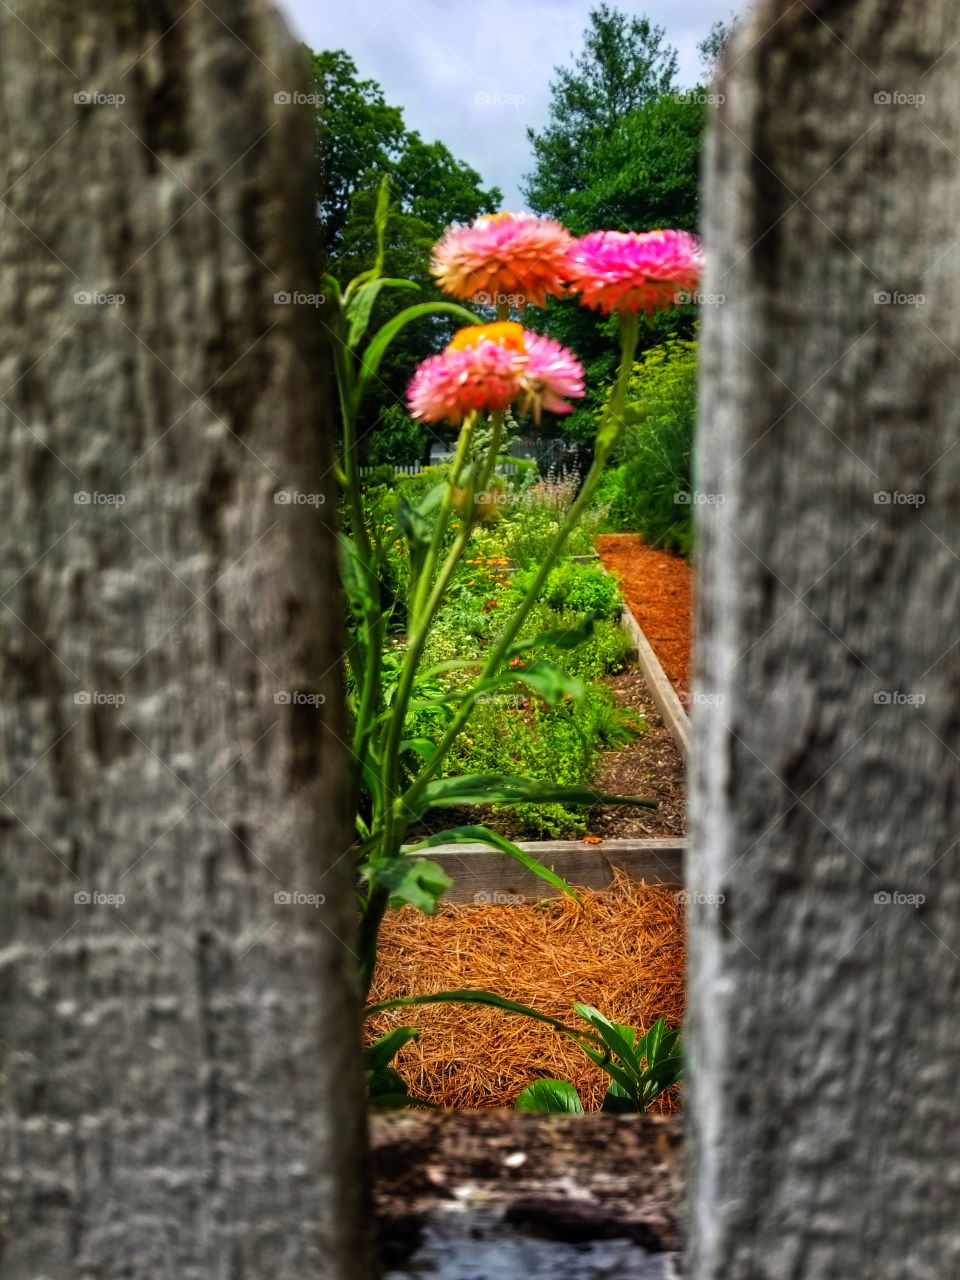 peeking at flowers